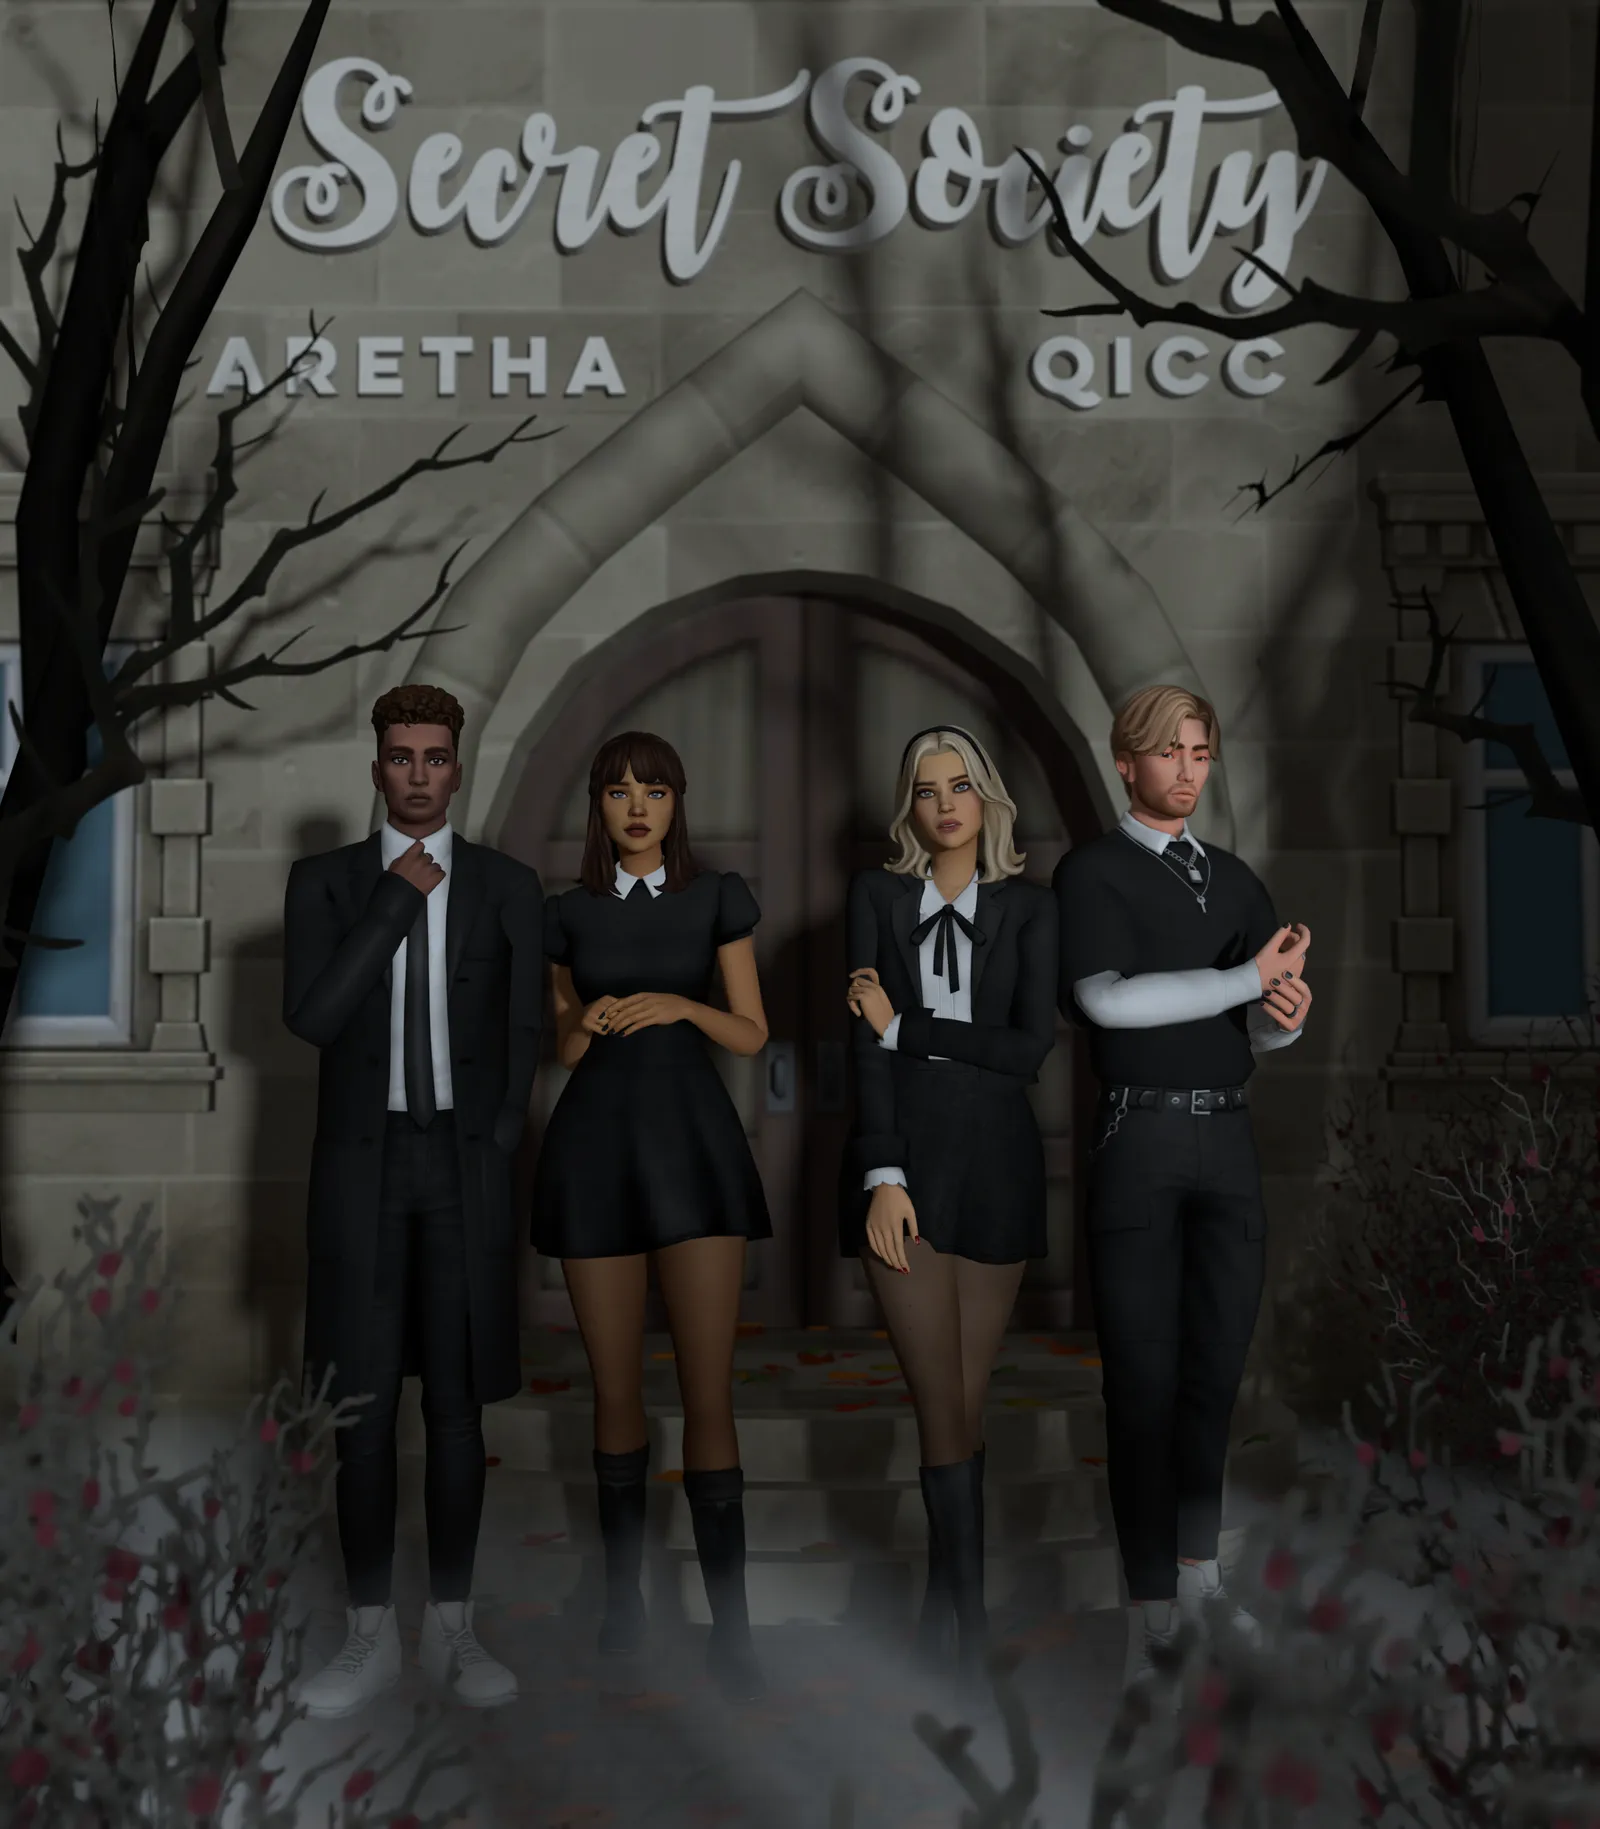 secret society collection [aretha x qicc]